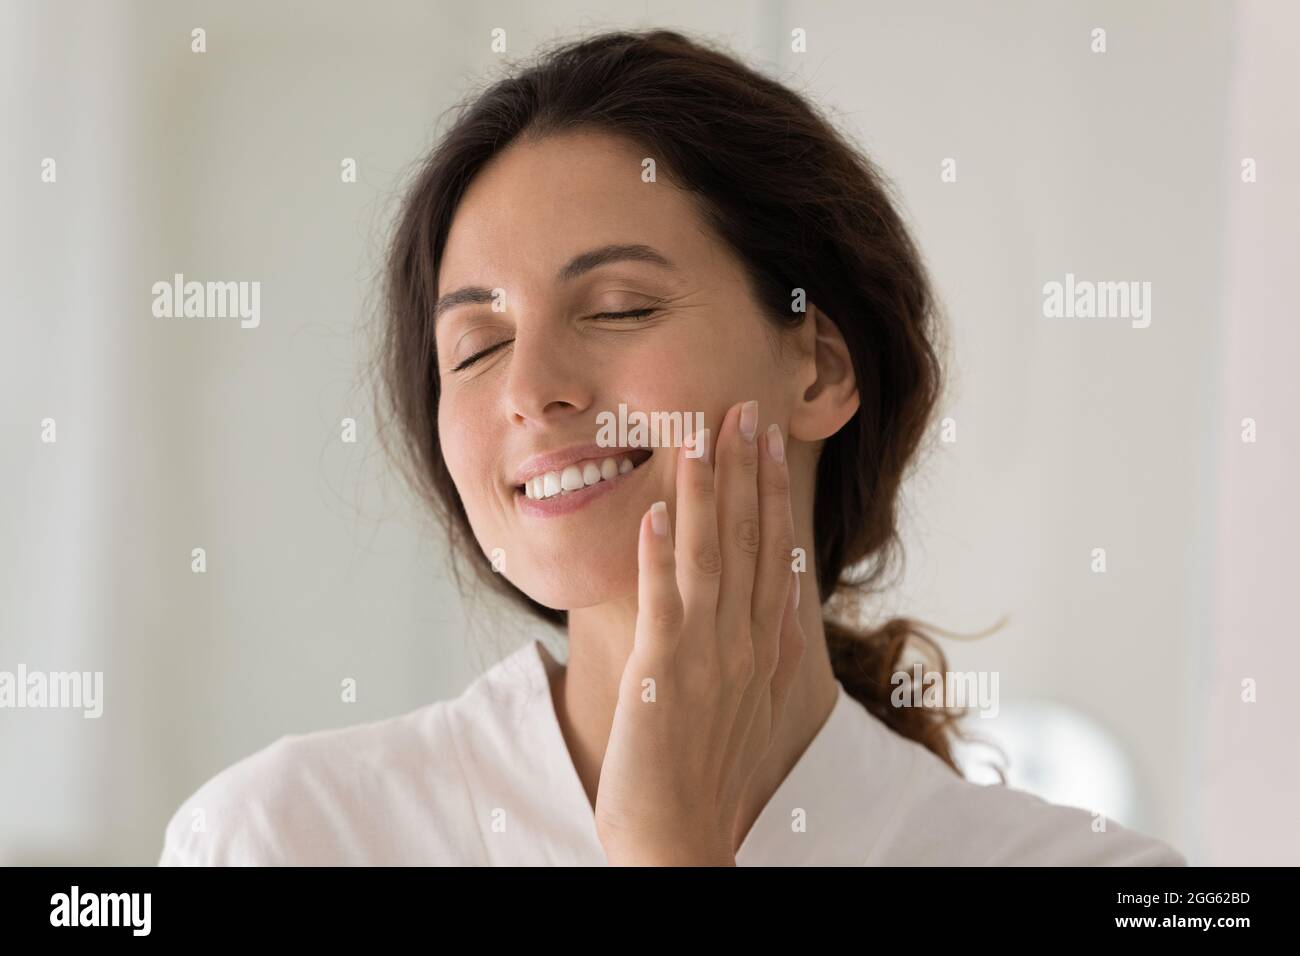 Smiling young woman touching soft facial skin. Stock Photo